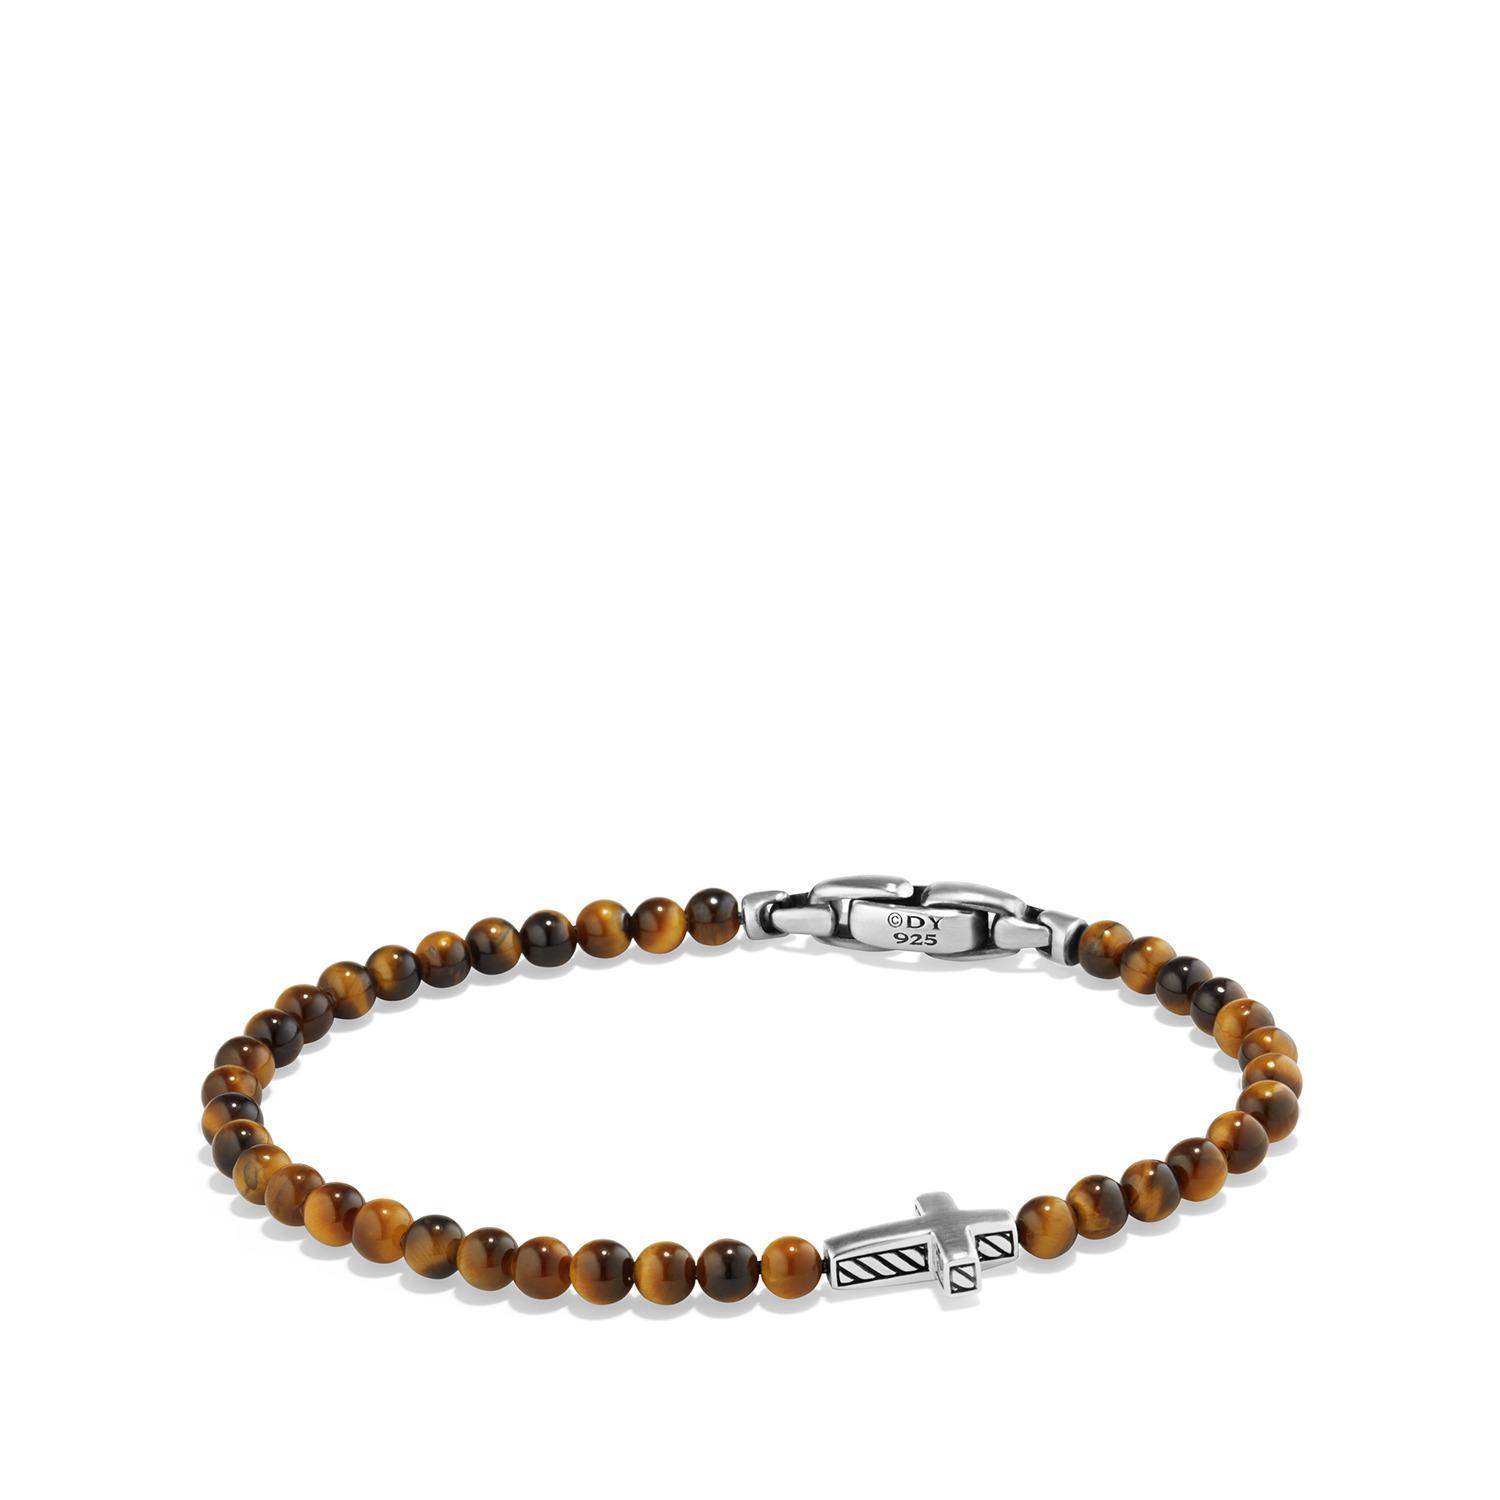 David Yurman Spiritual Beads Cross Station Bracelet with Tigers Eye, size Small 0